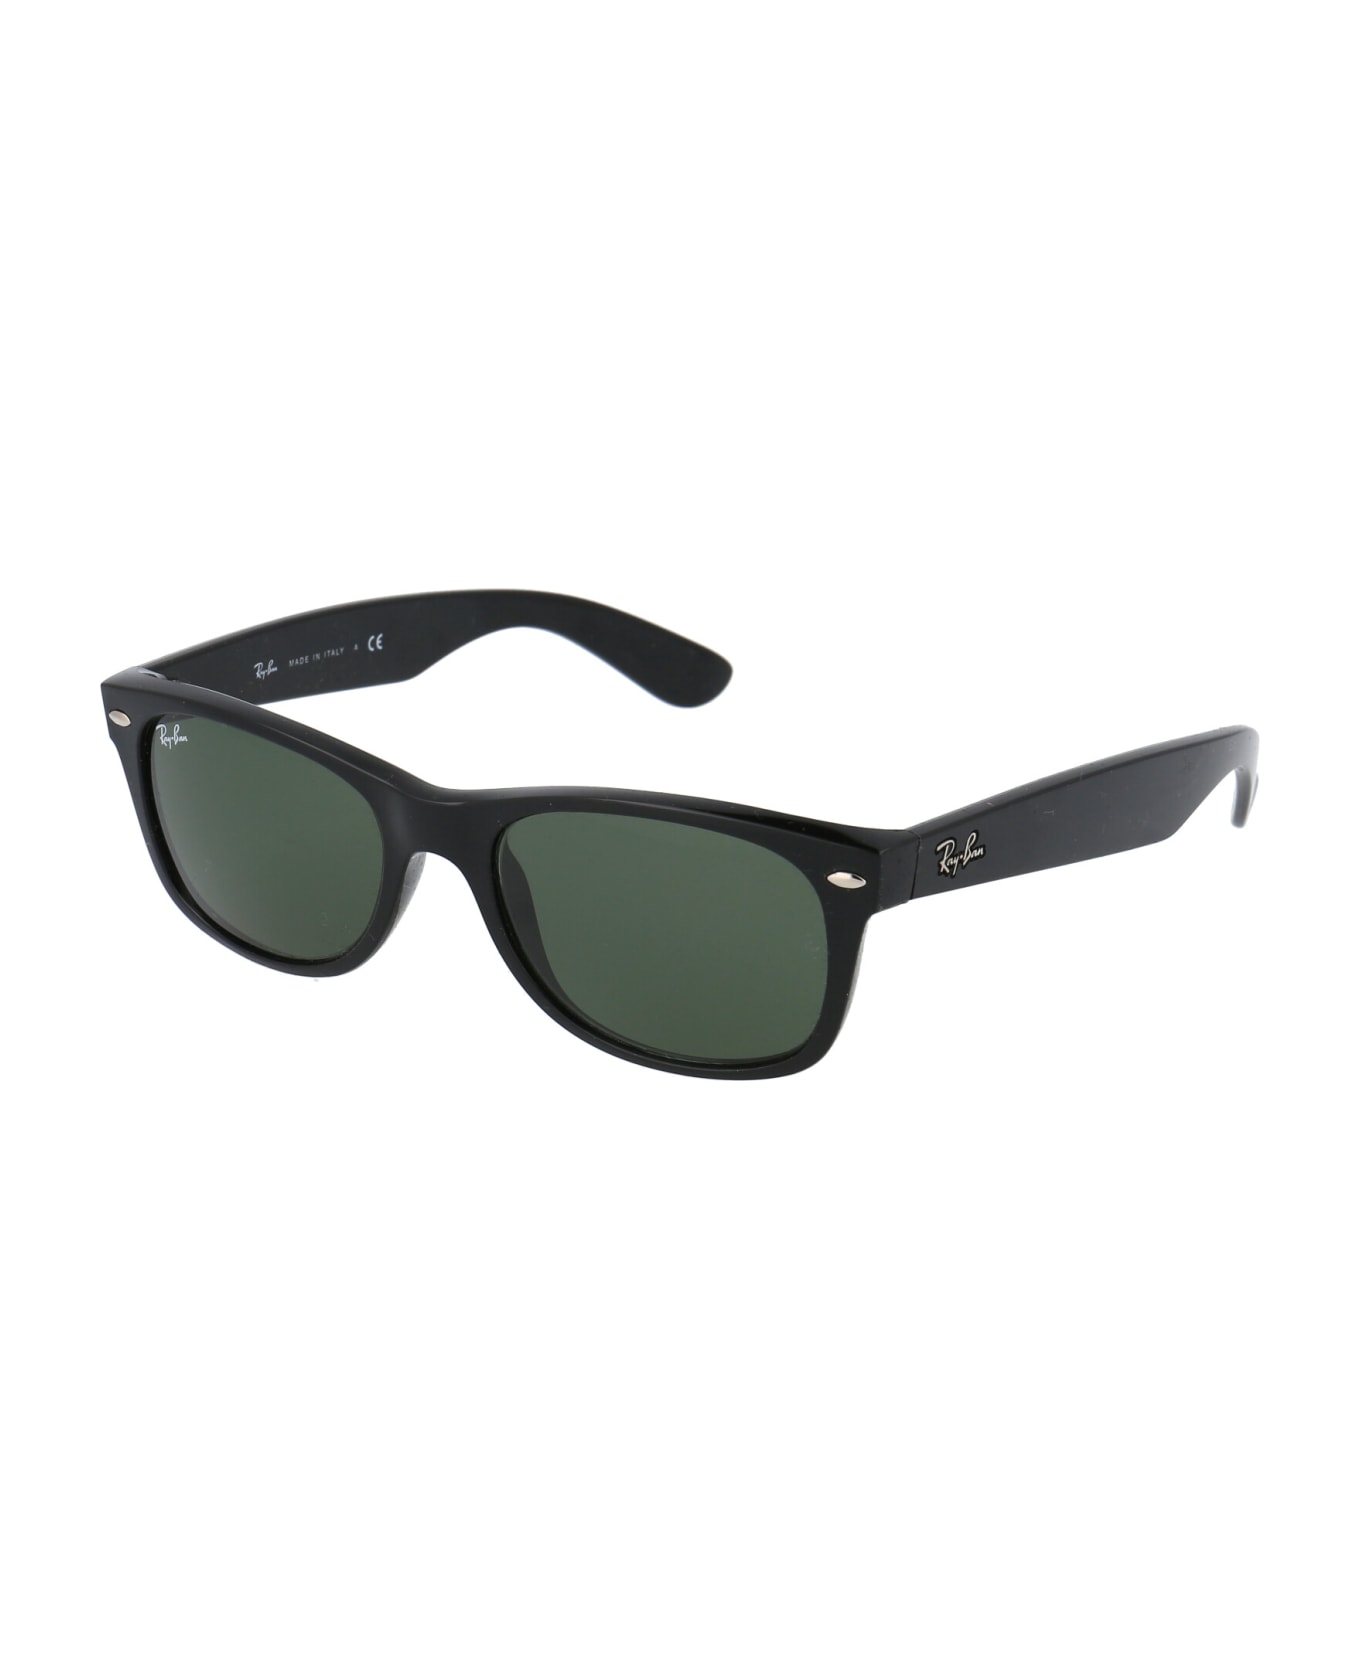 Ray-Ban New Wayfarer Sunglasses - 901 BLACK